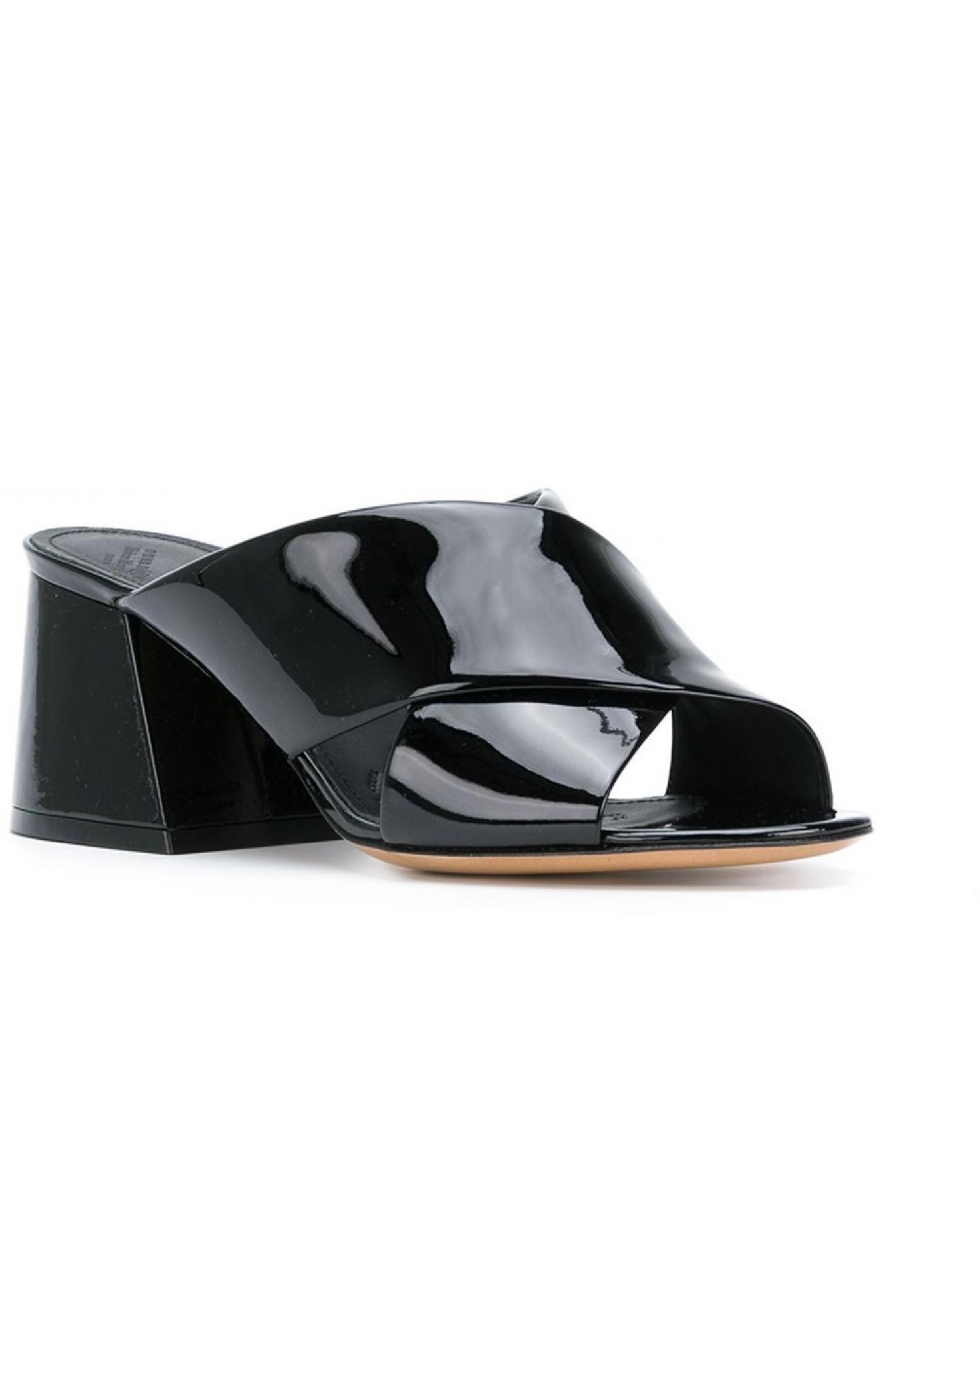 Maison Margiela high heel slide sandals in black patent leathr ...